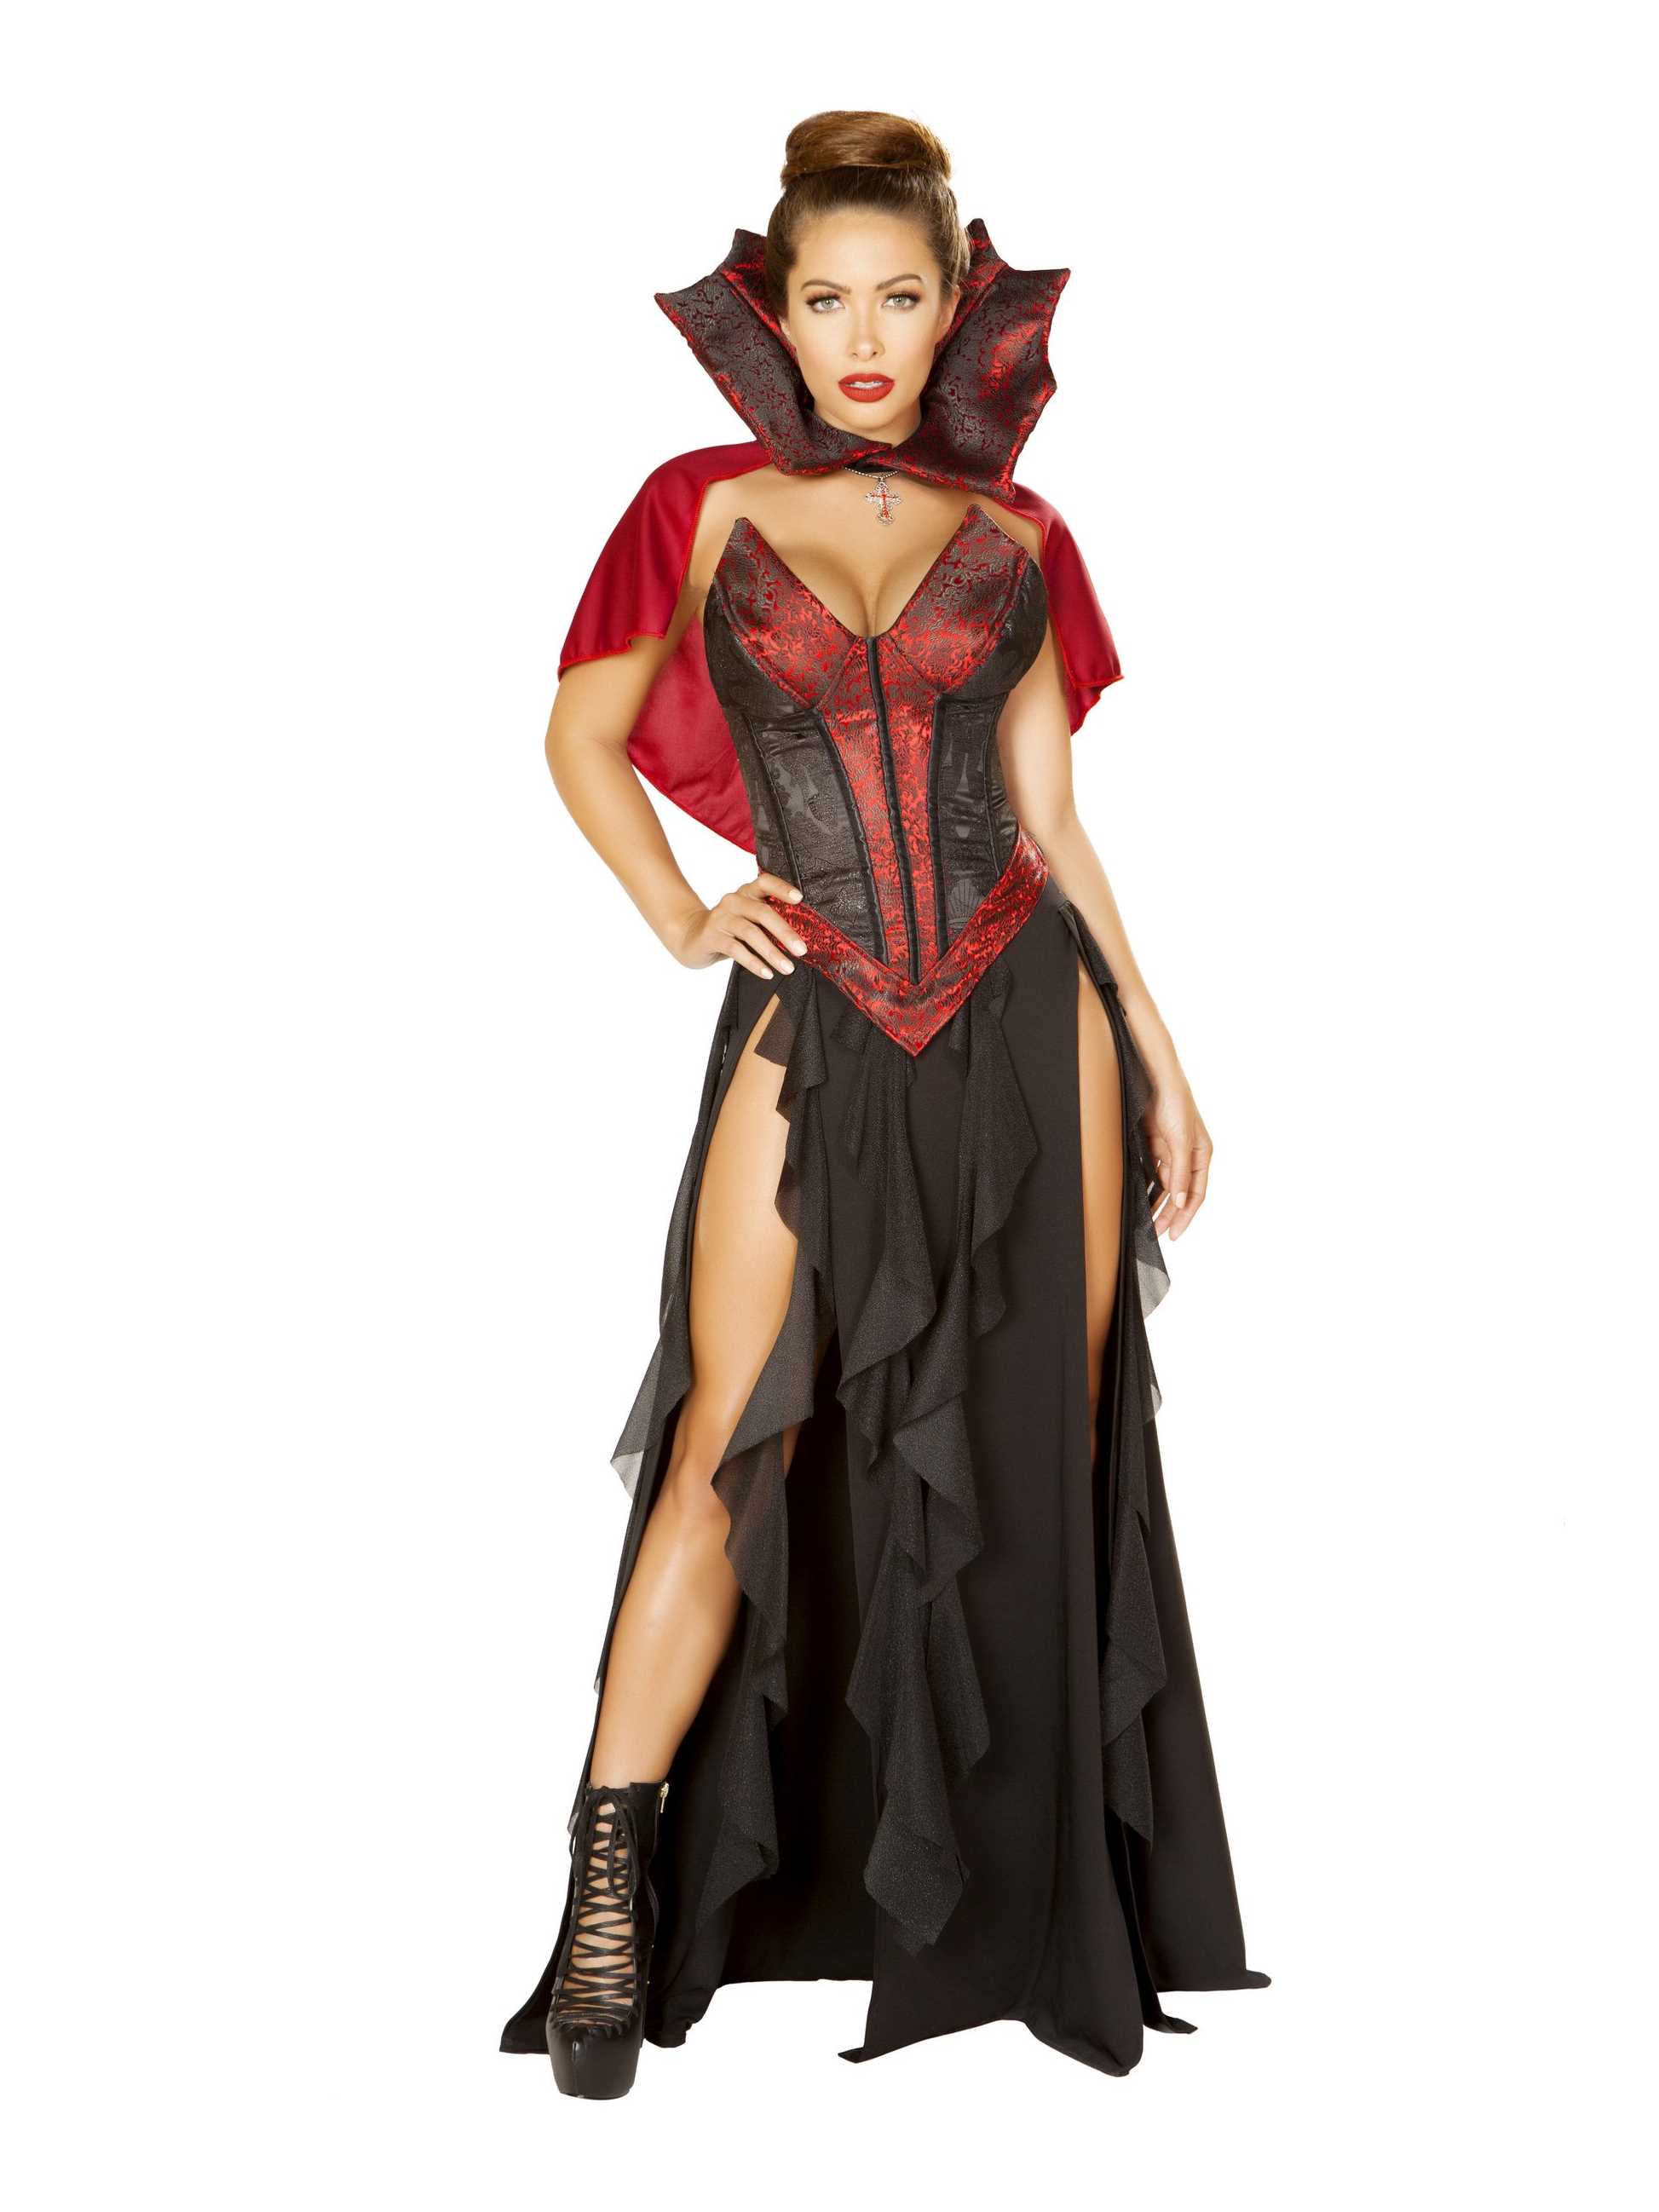 Blood Lusting Vampire Women's Costume - image 1 of 2